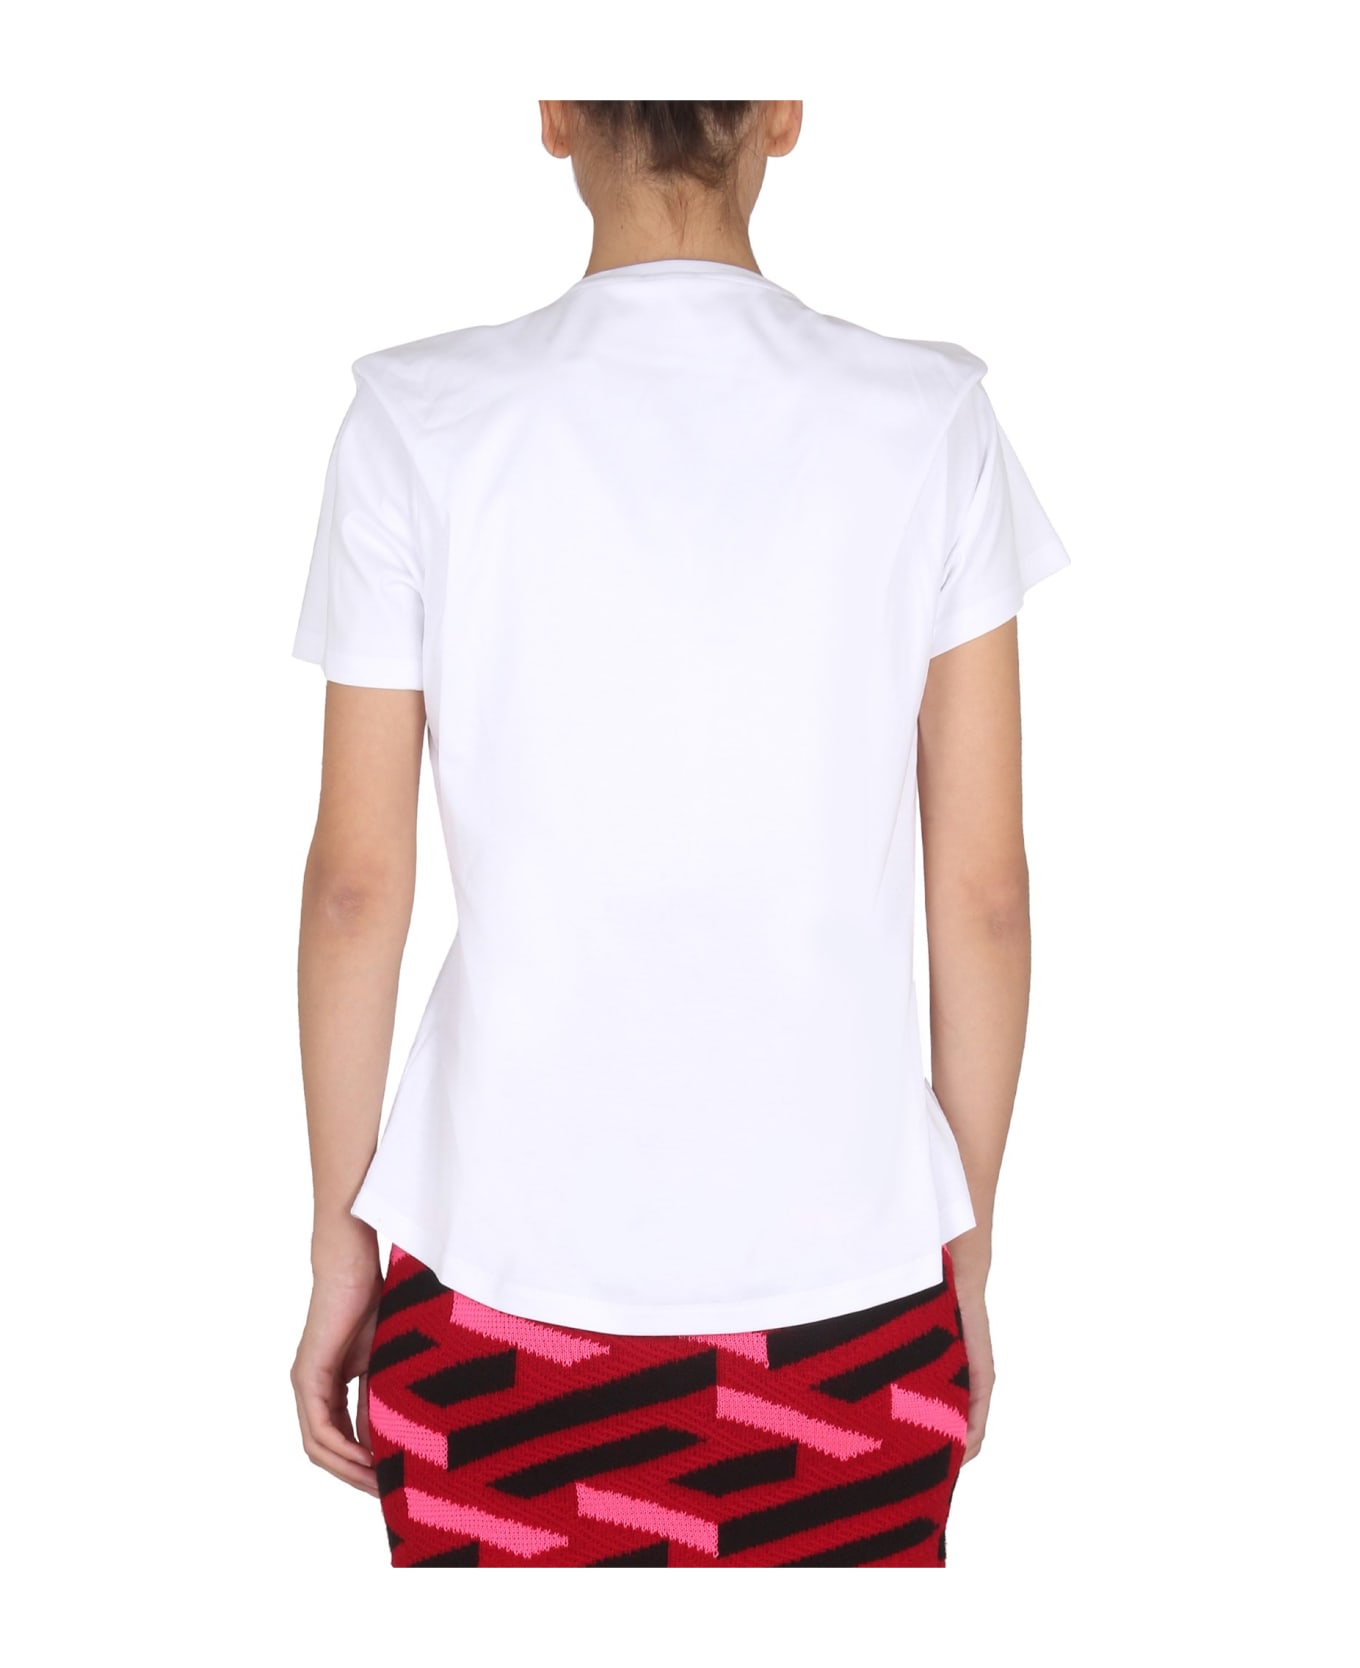 Versace T Shirt With Logo - BIANCO